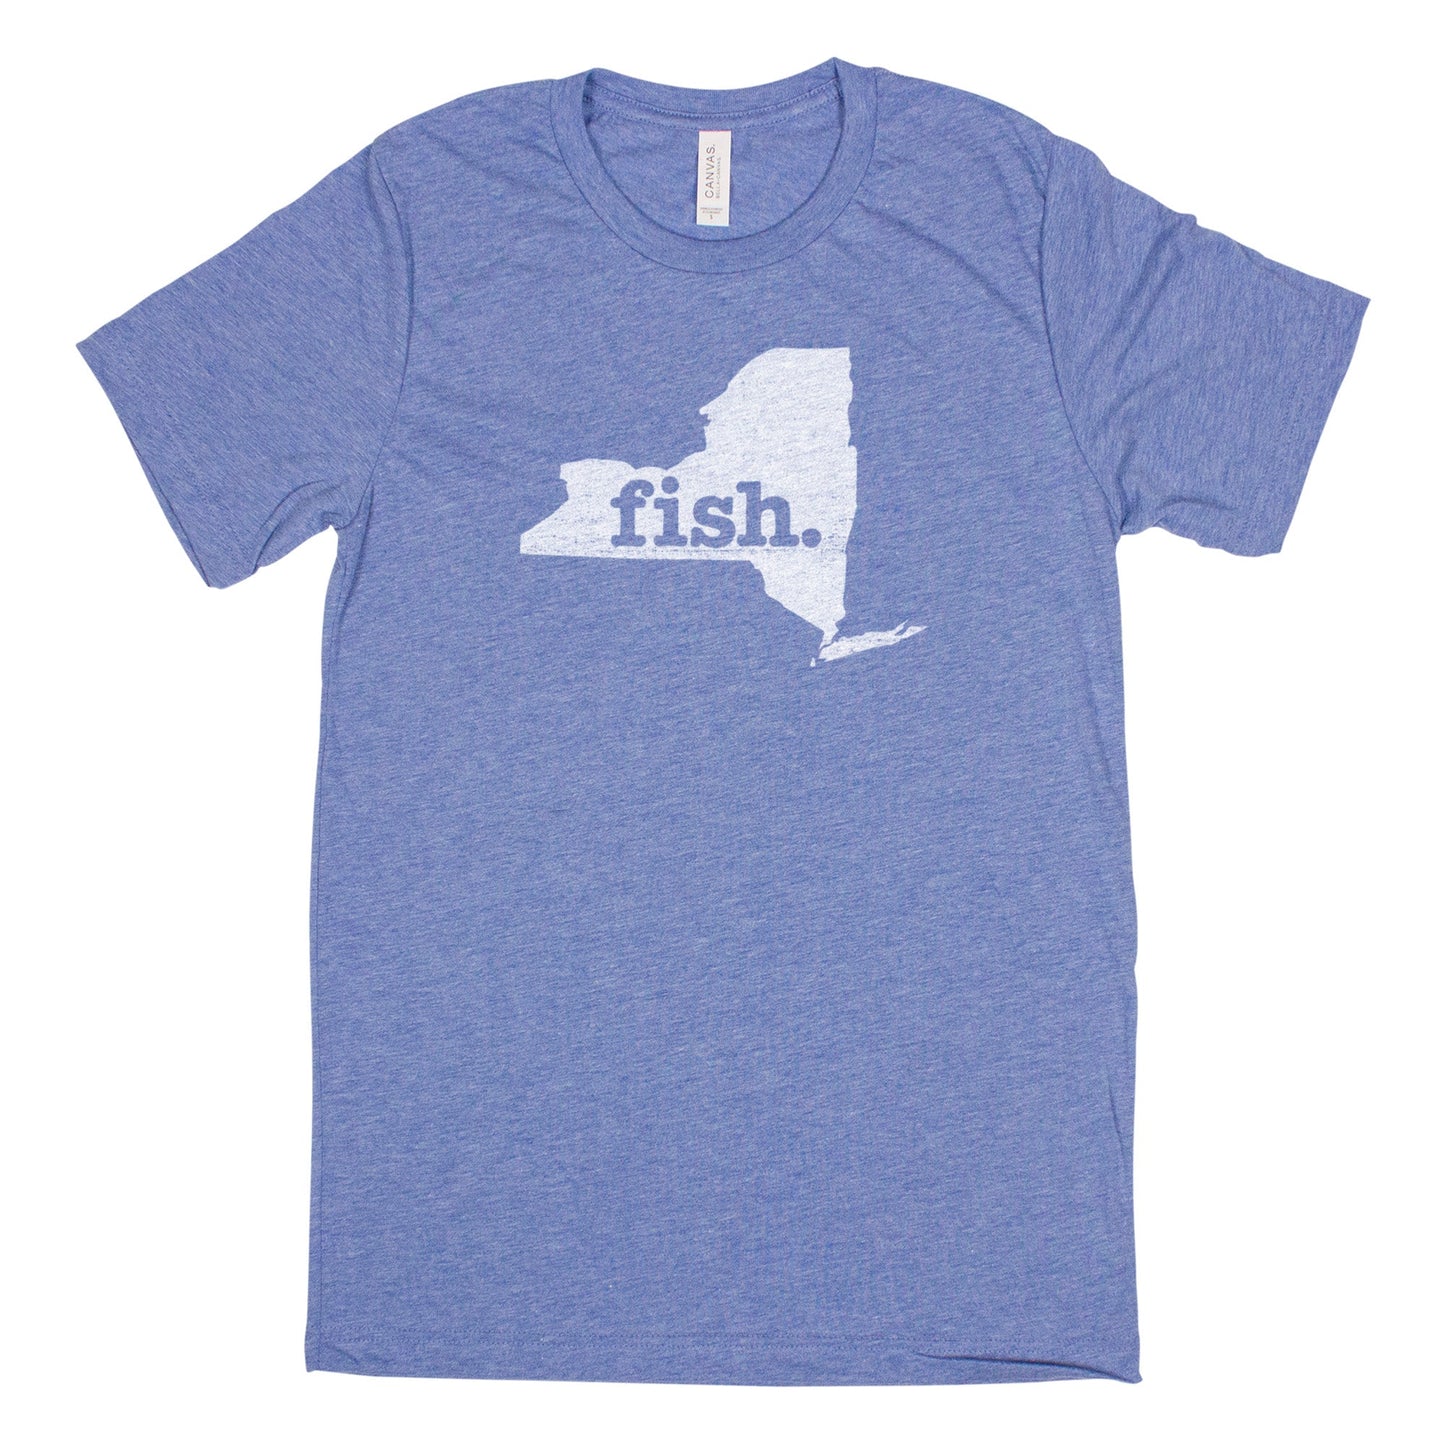 fish. Men's Unisex T-Shirt - New York